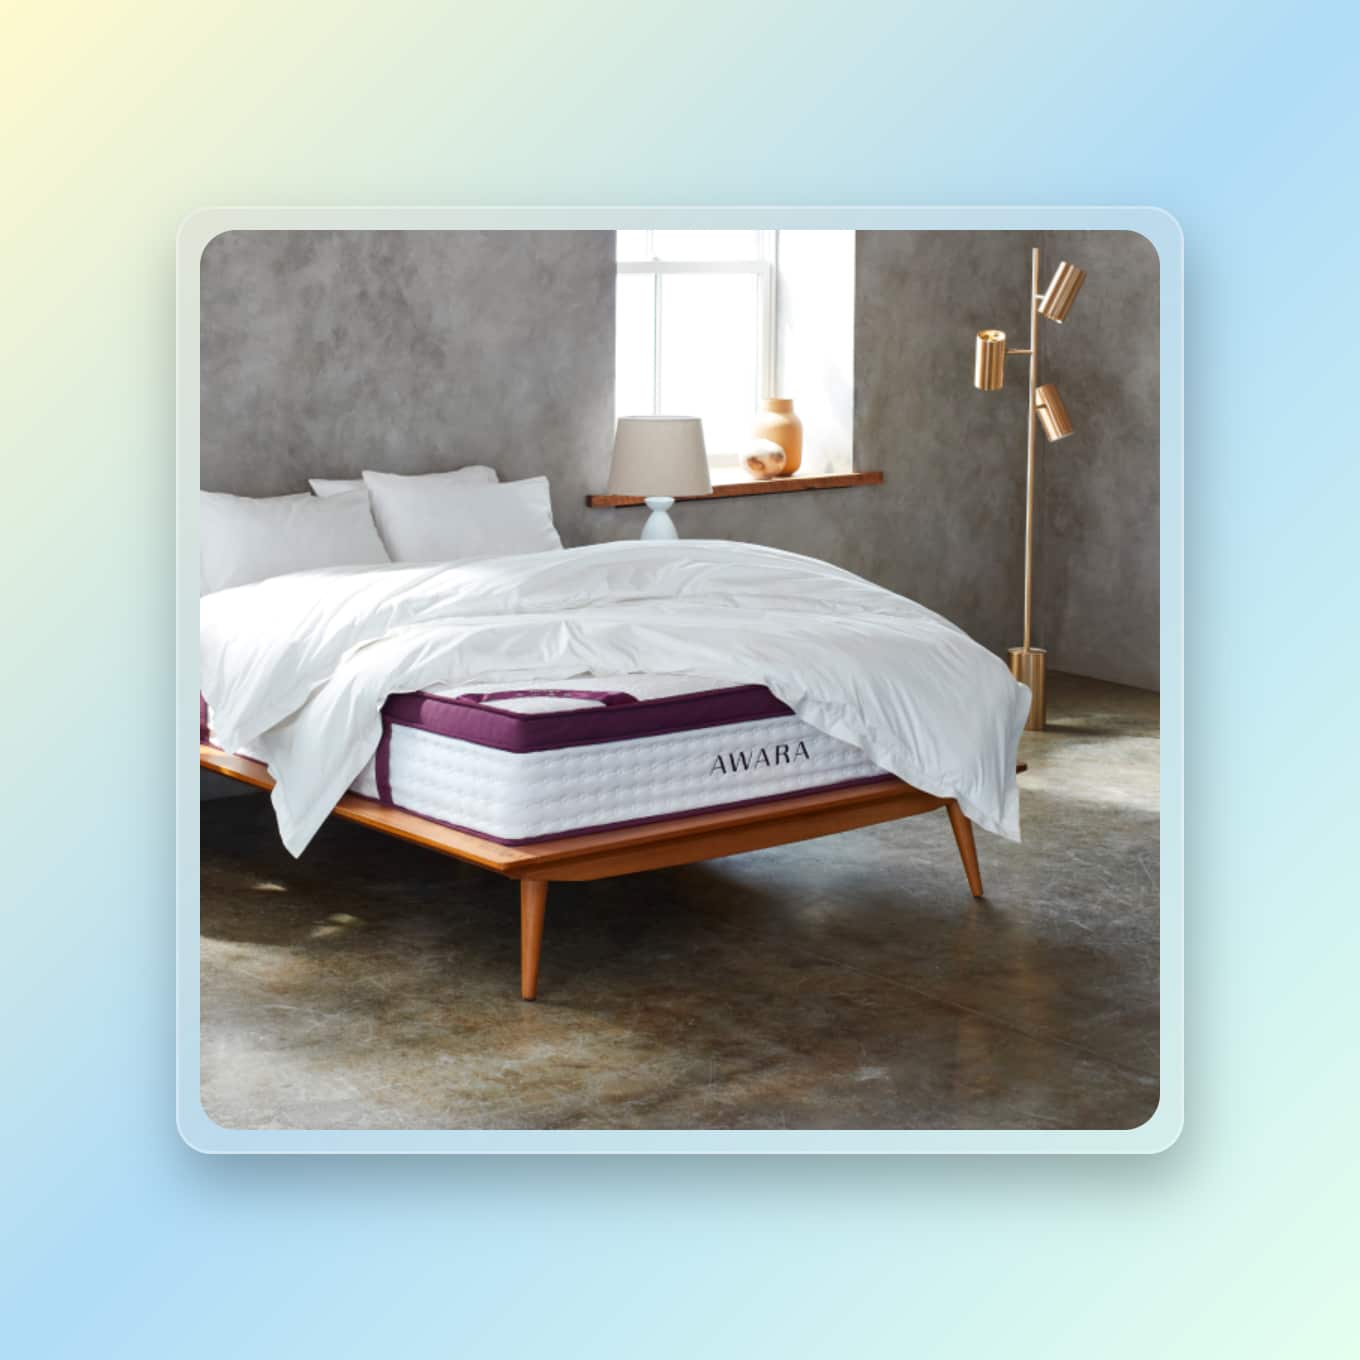 Awara mattress styled in a modern bedroom set